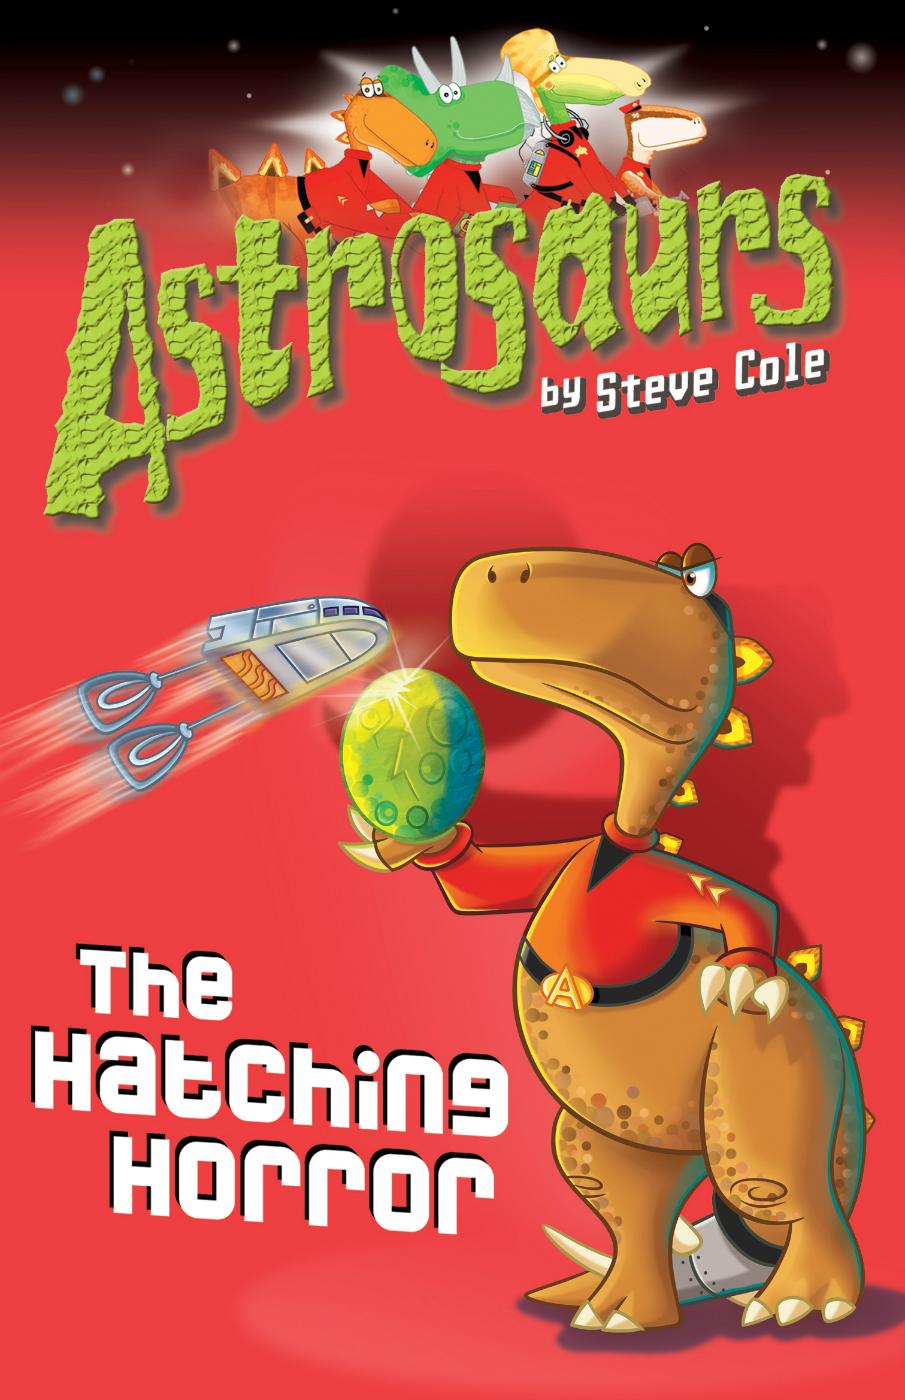 Astrosaurs 2 by Steve Cole